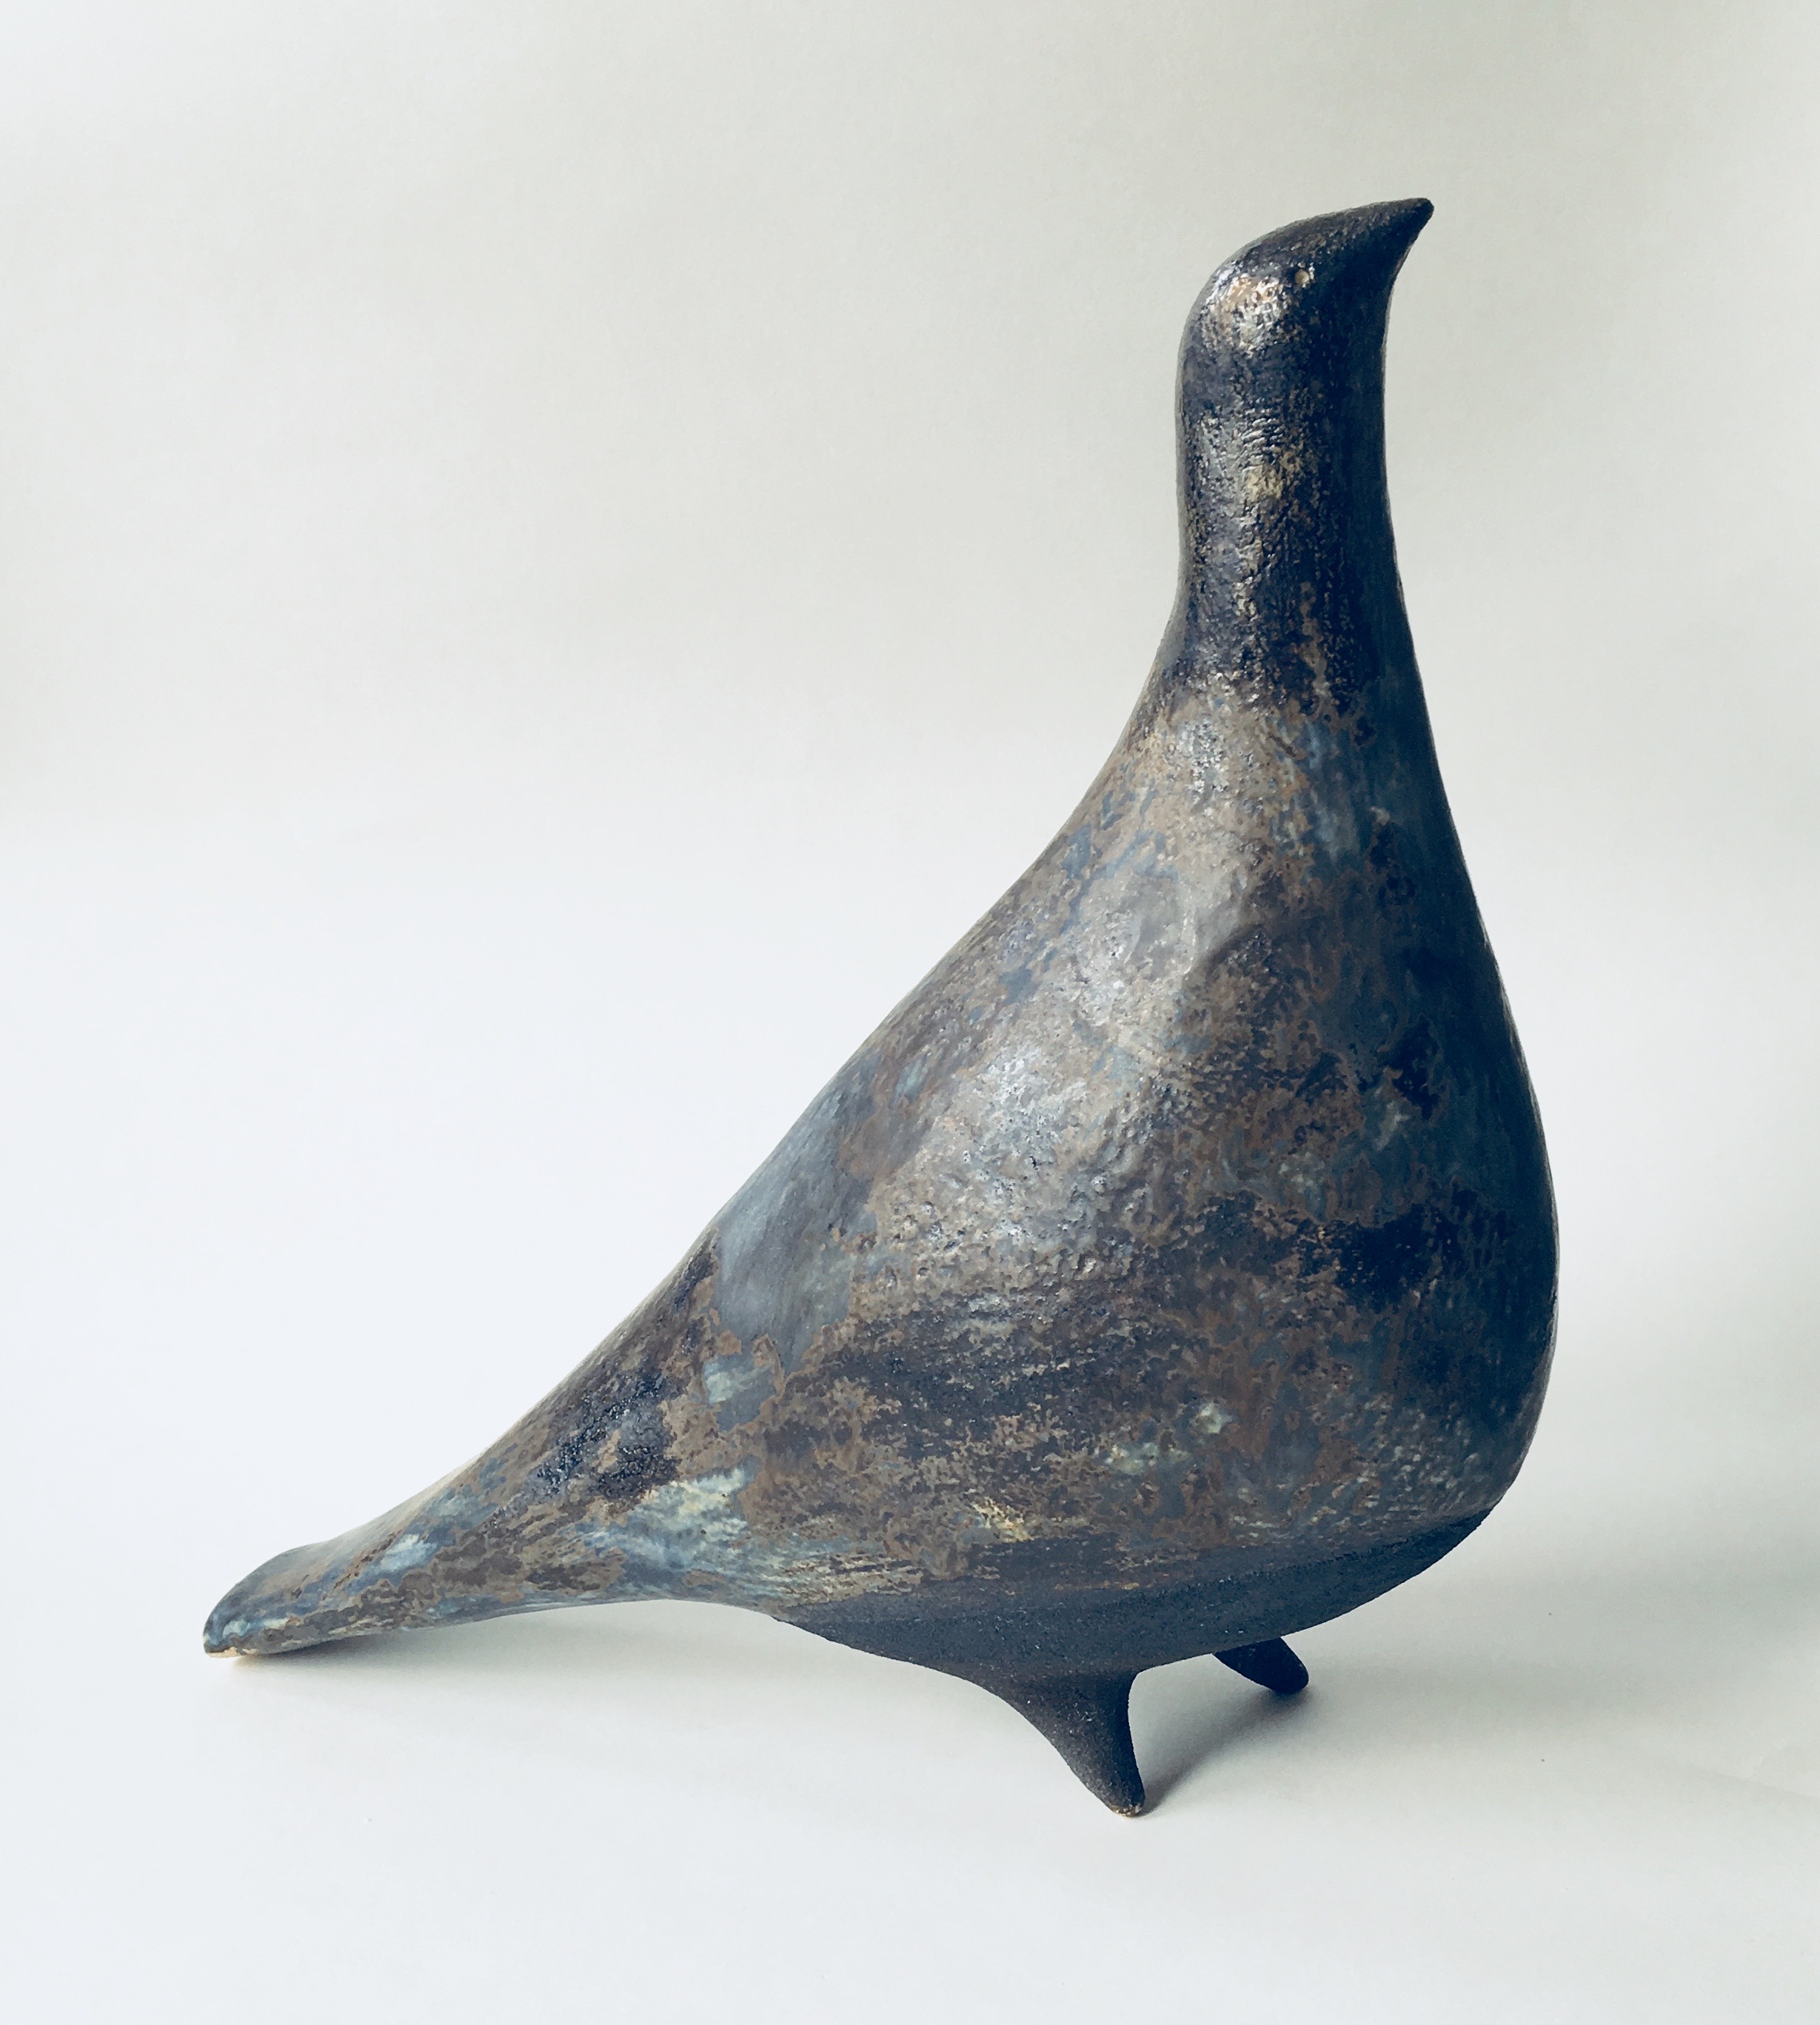  Title: Metalic Ponti Bird Size: H 28 x W 9 x L 28 cm Medium: Ceramic 